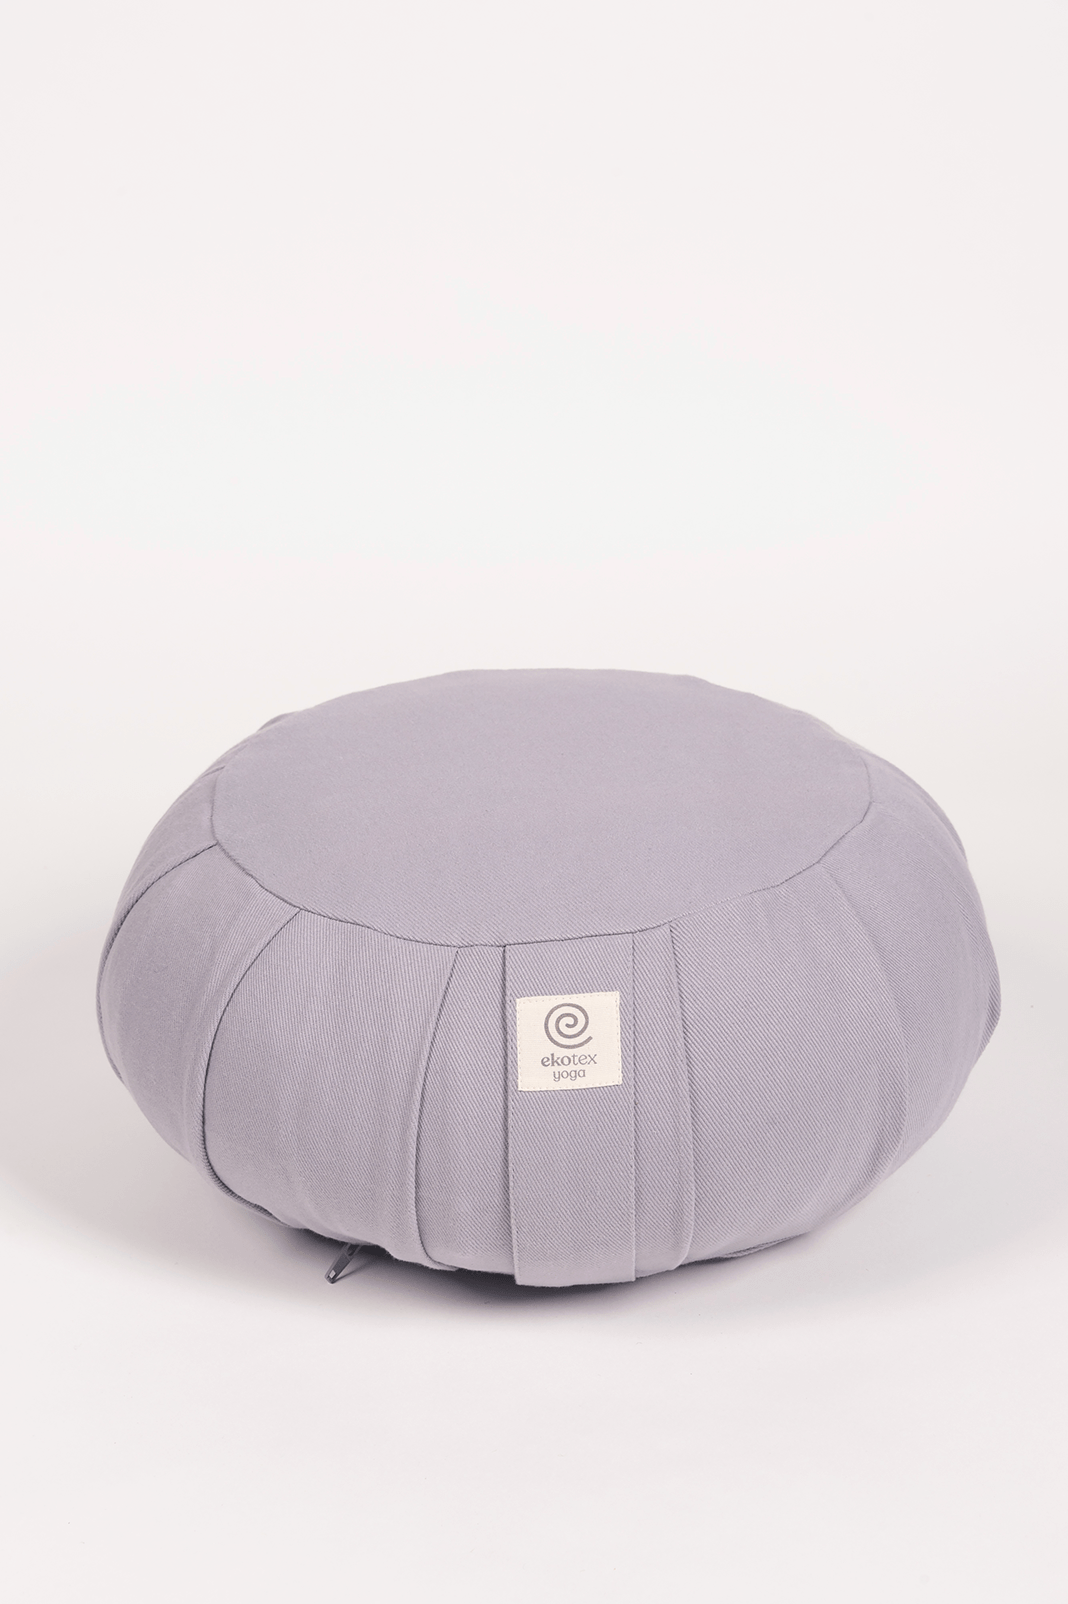 Meditation Cushions Calm Grey Round Zafu Cushion Cover